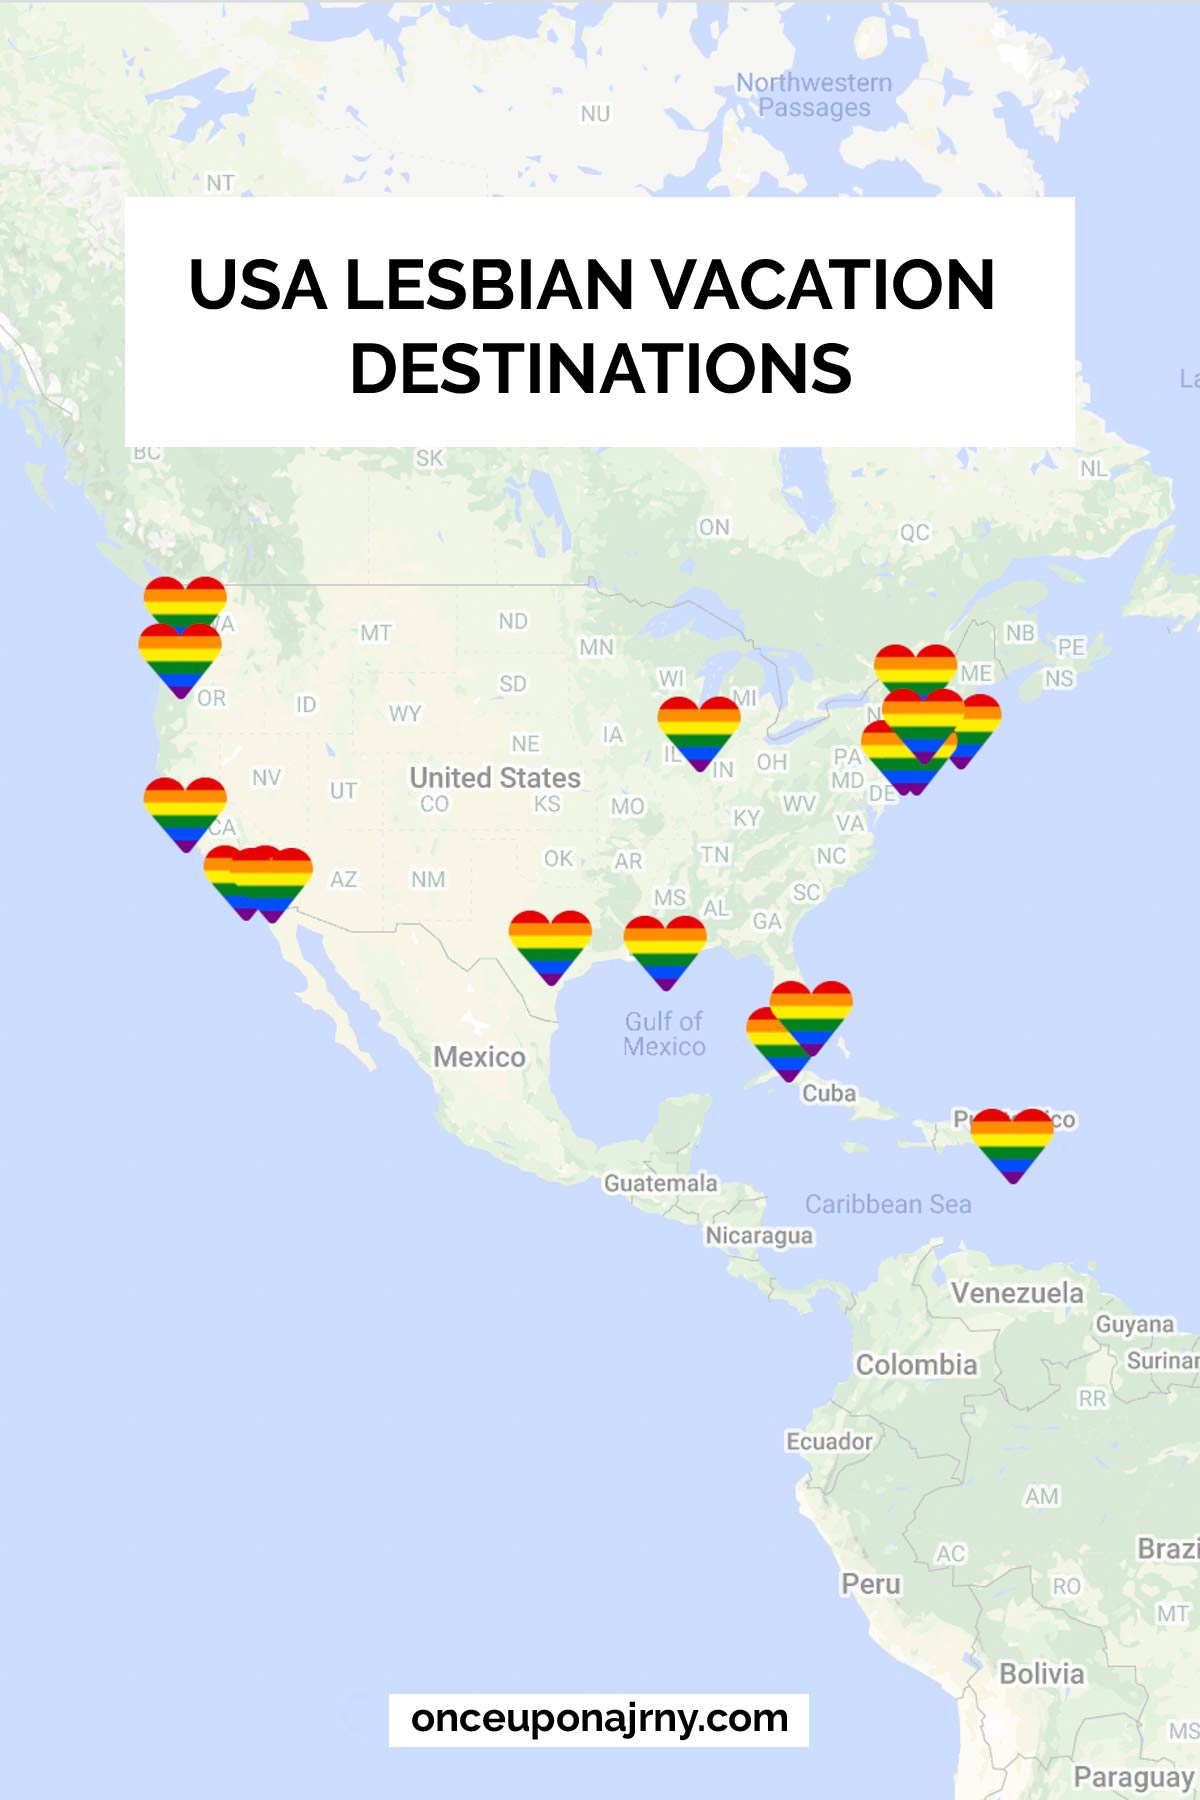 USA lesbian vacation destinations